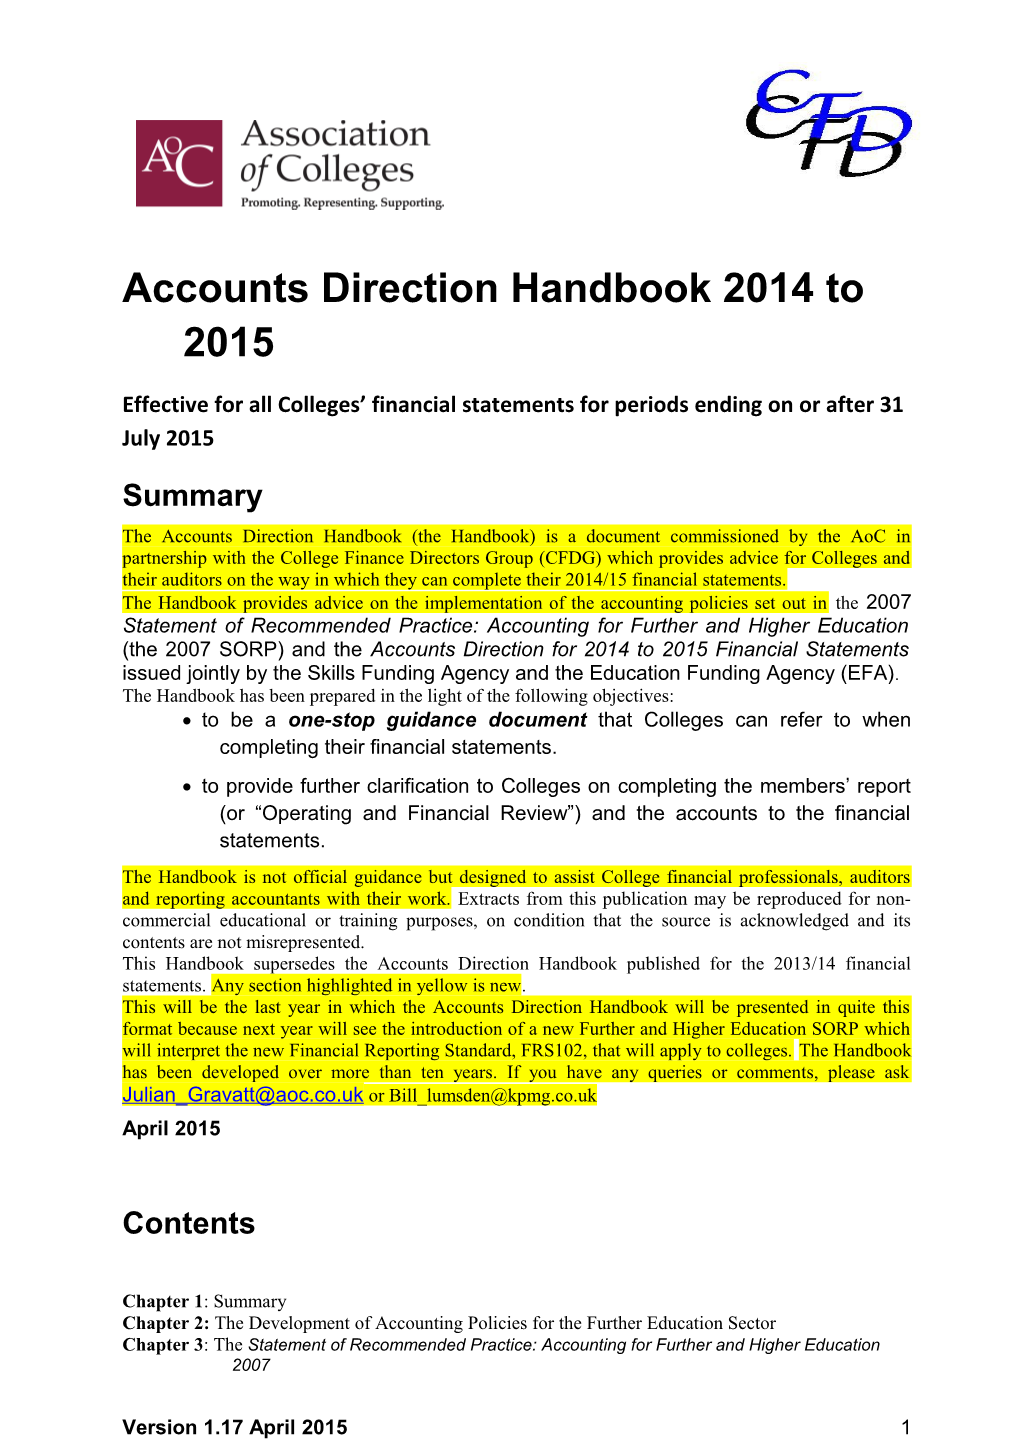 Accounts Direction Handbook 2013/14